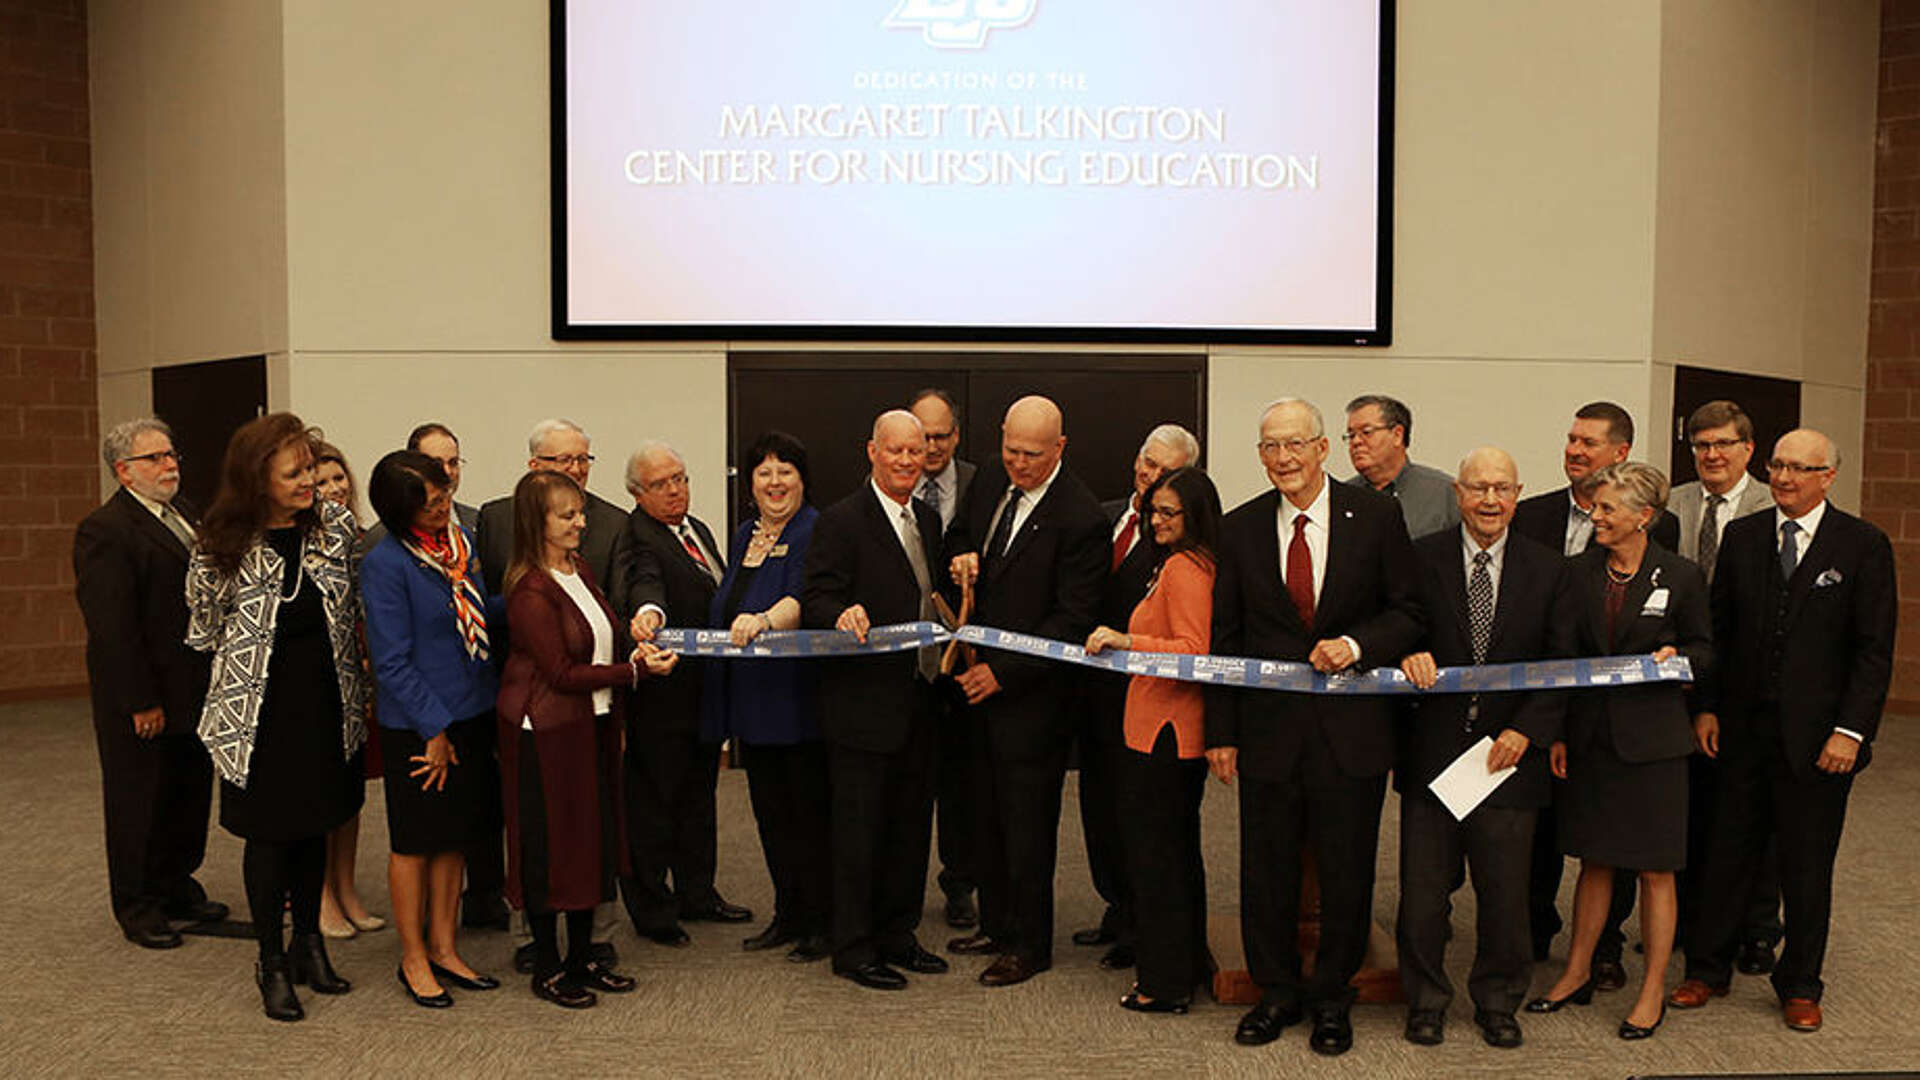 Ribbon cutting for opening of the Margaret Talkington Center for Nursing Education